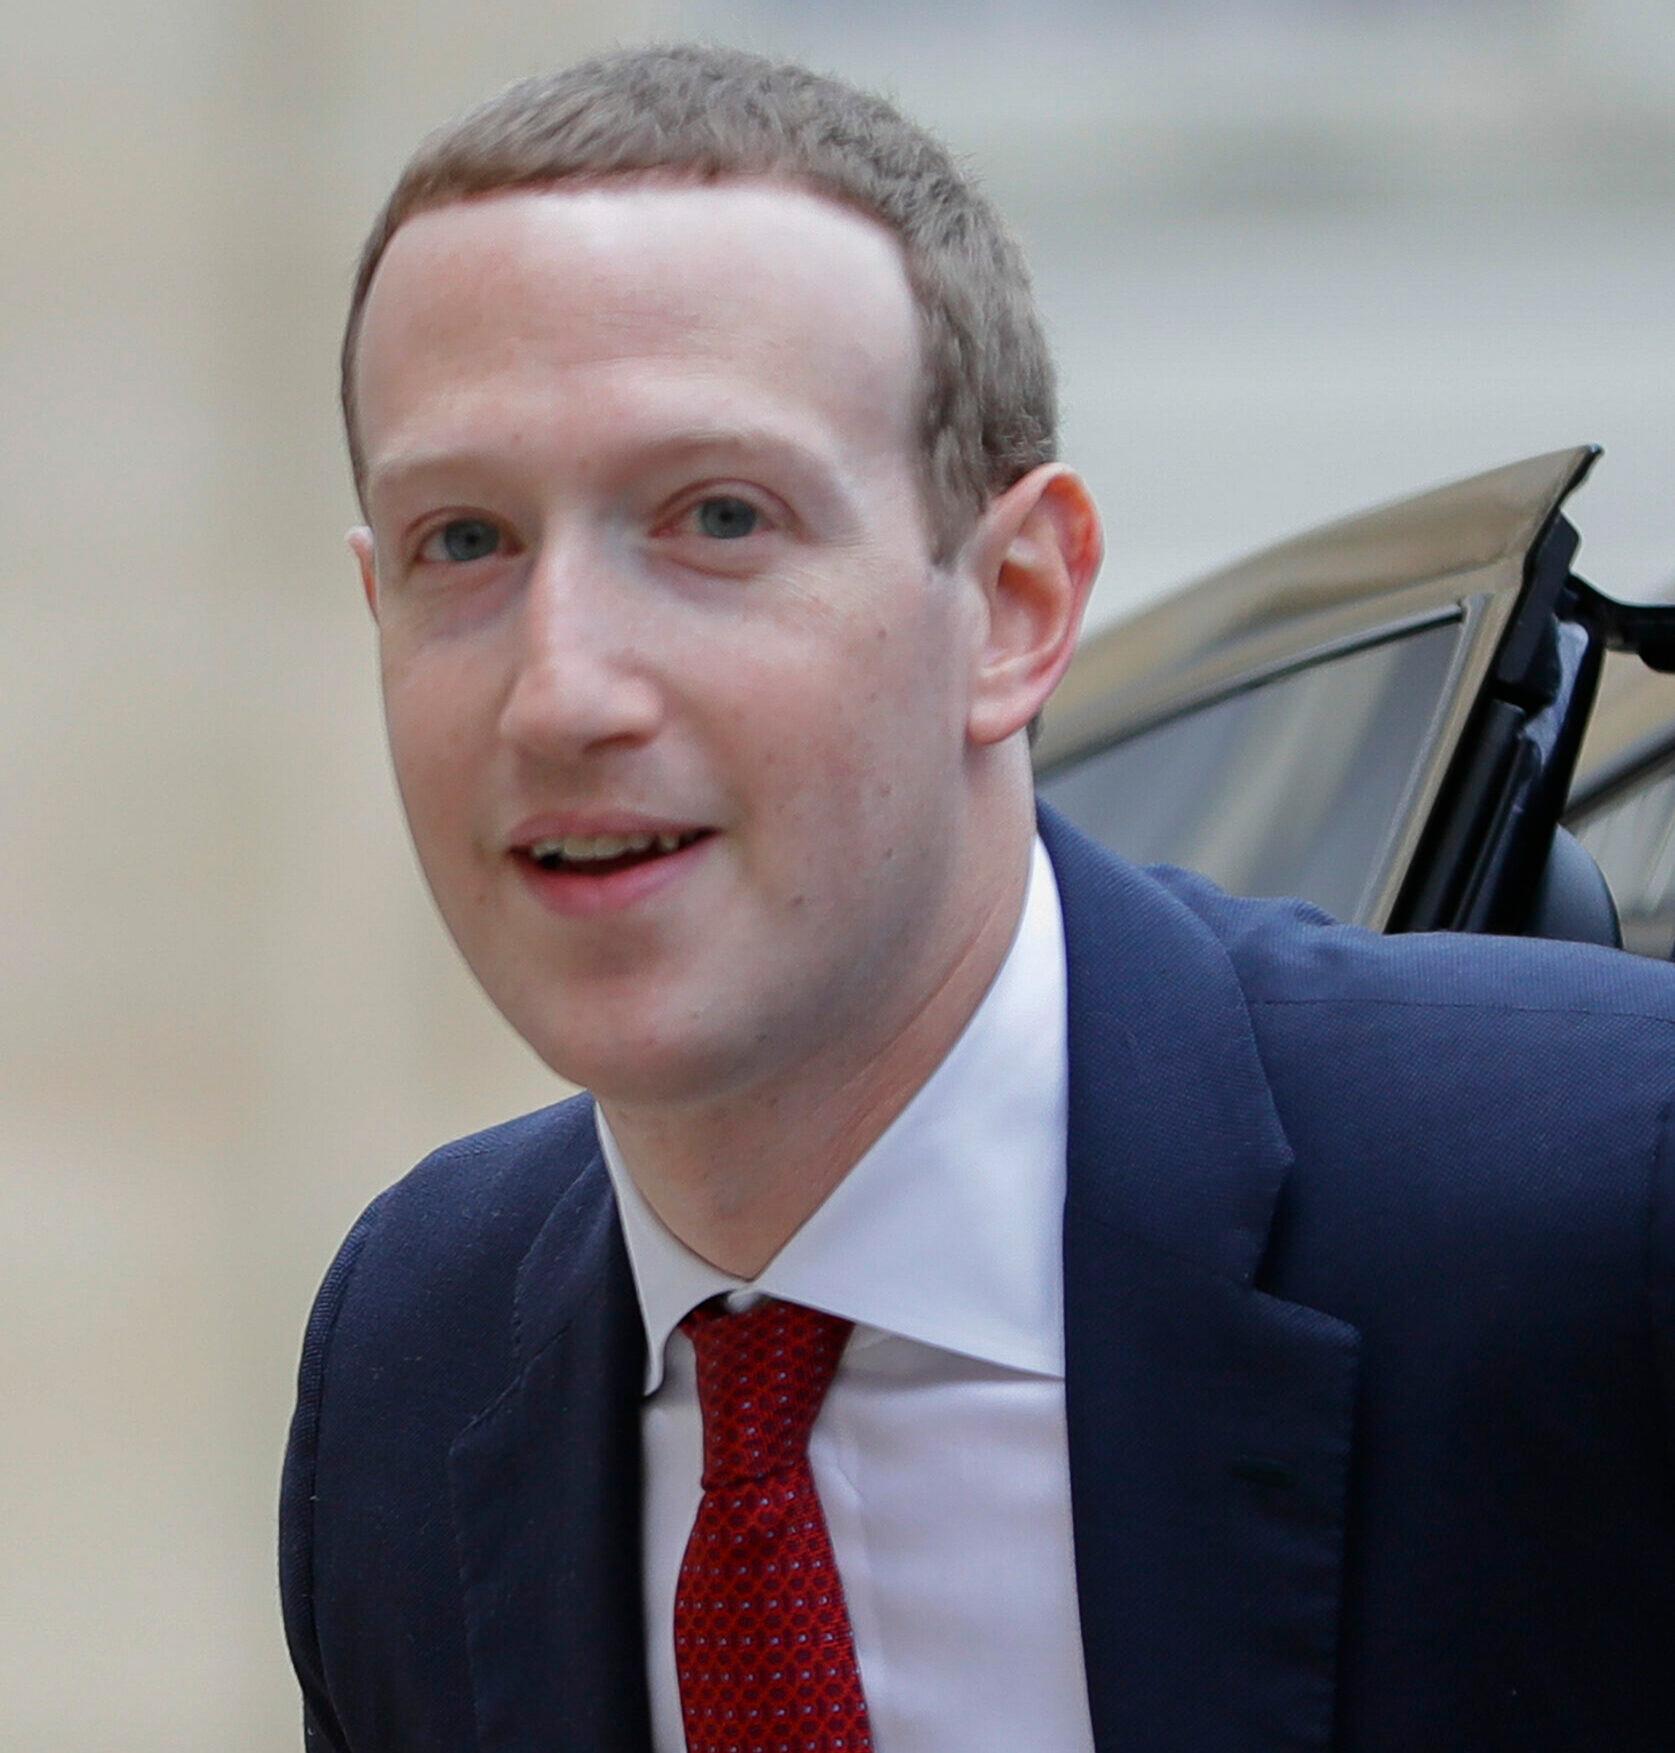 Facebook Inc's CEO Mark Zuckerberg in visit to meet the French Republic President Emmanuel Macron